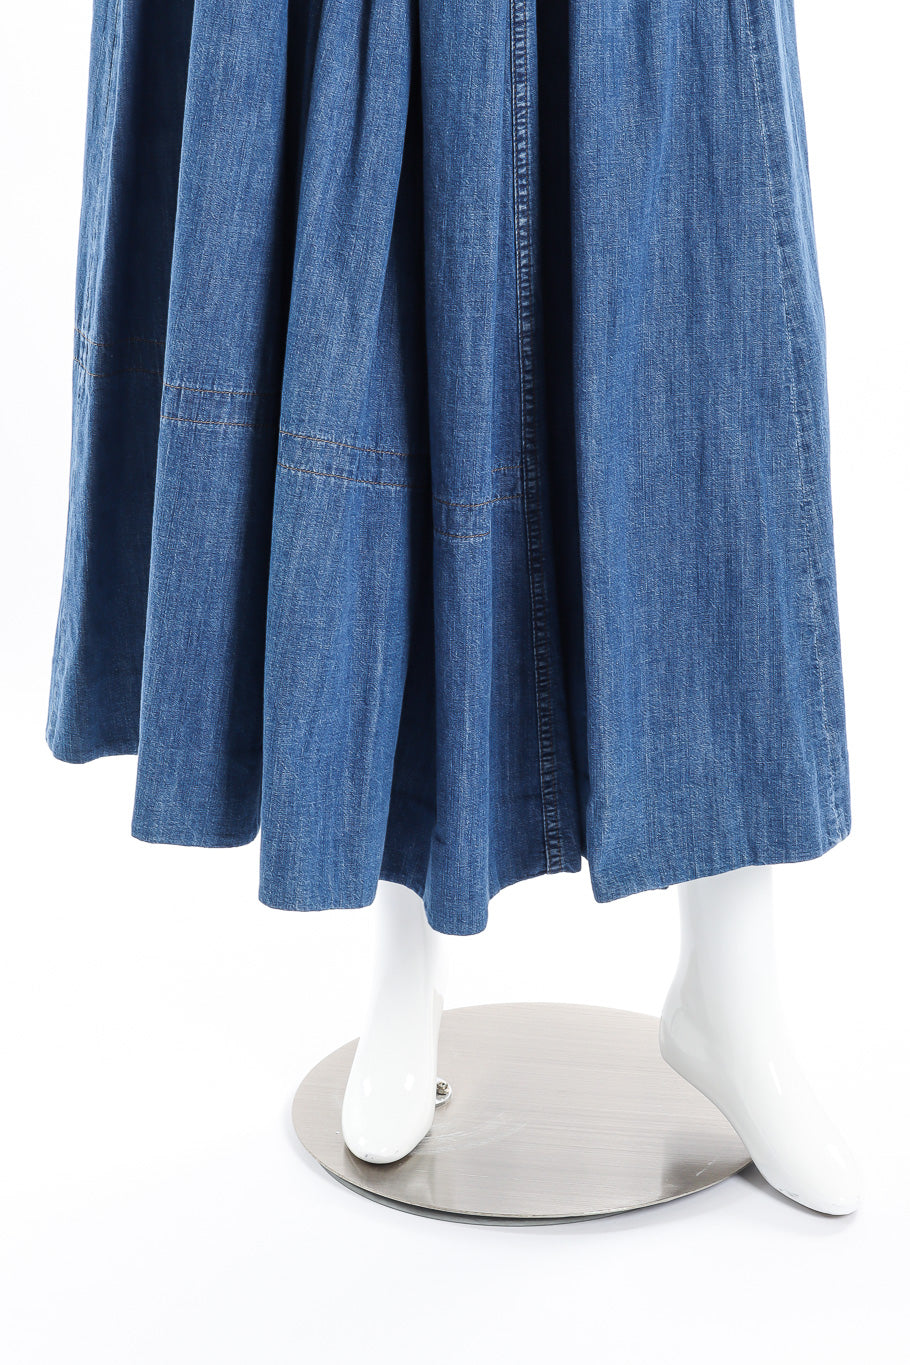 Prada denim peasant skirt bottom detail @recessla